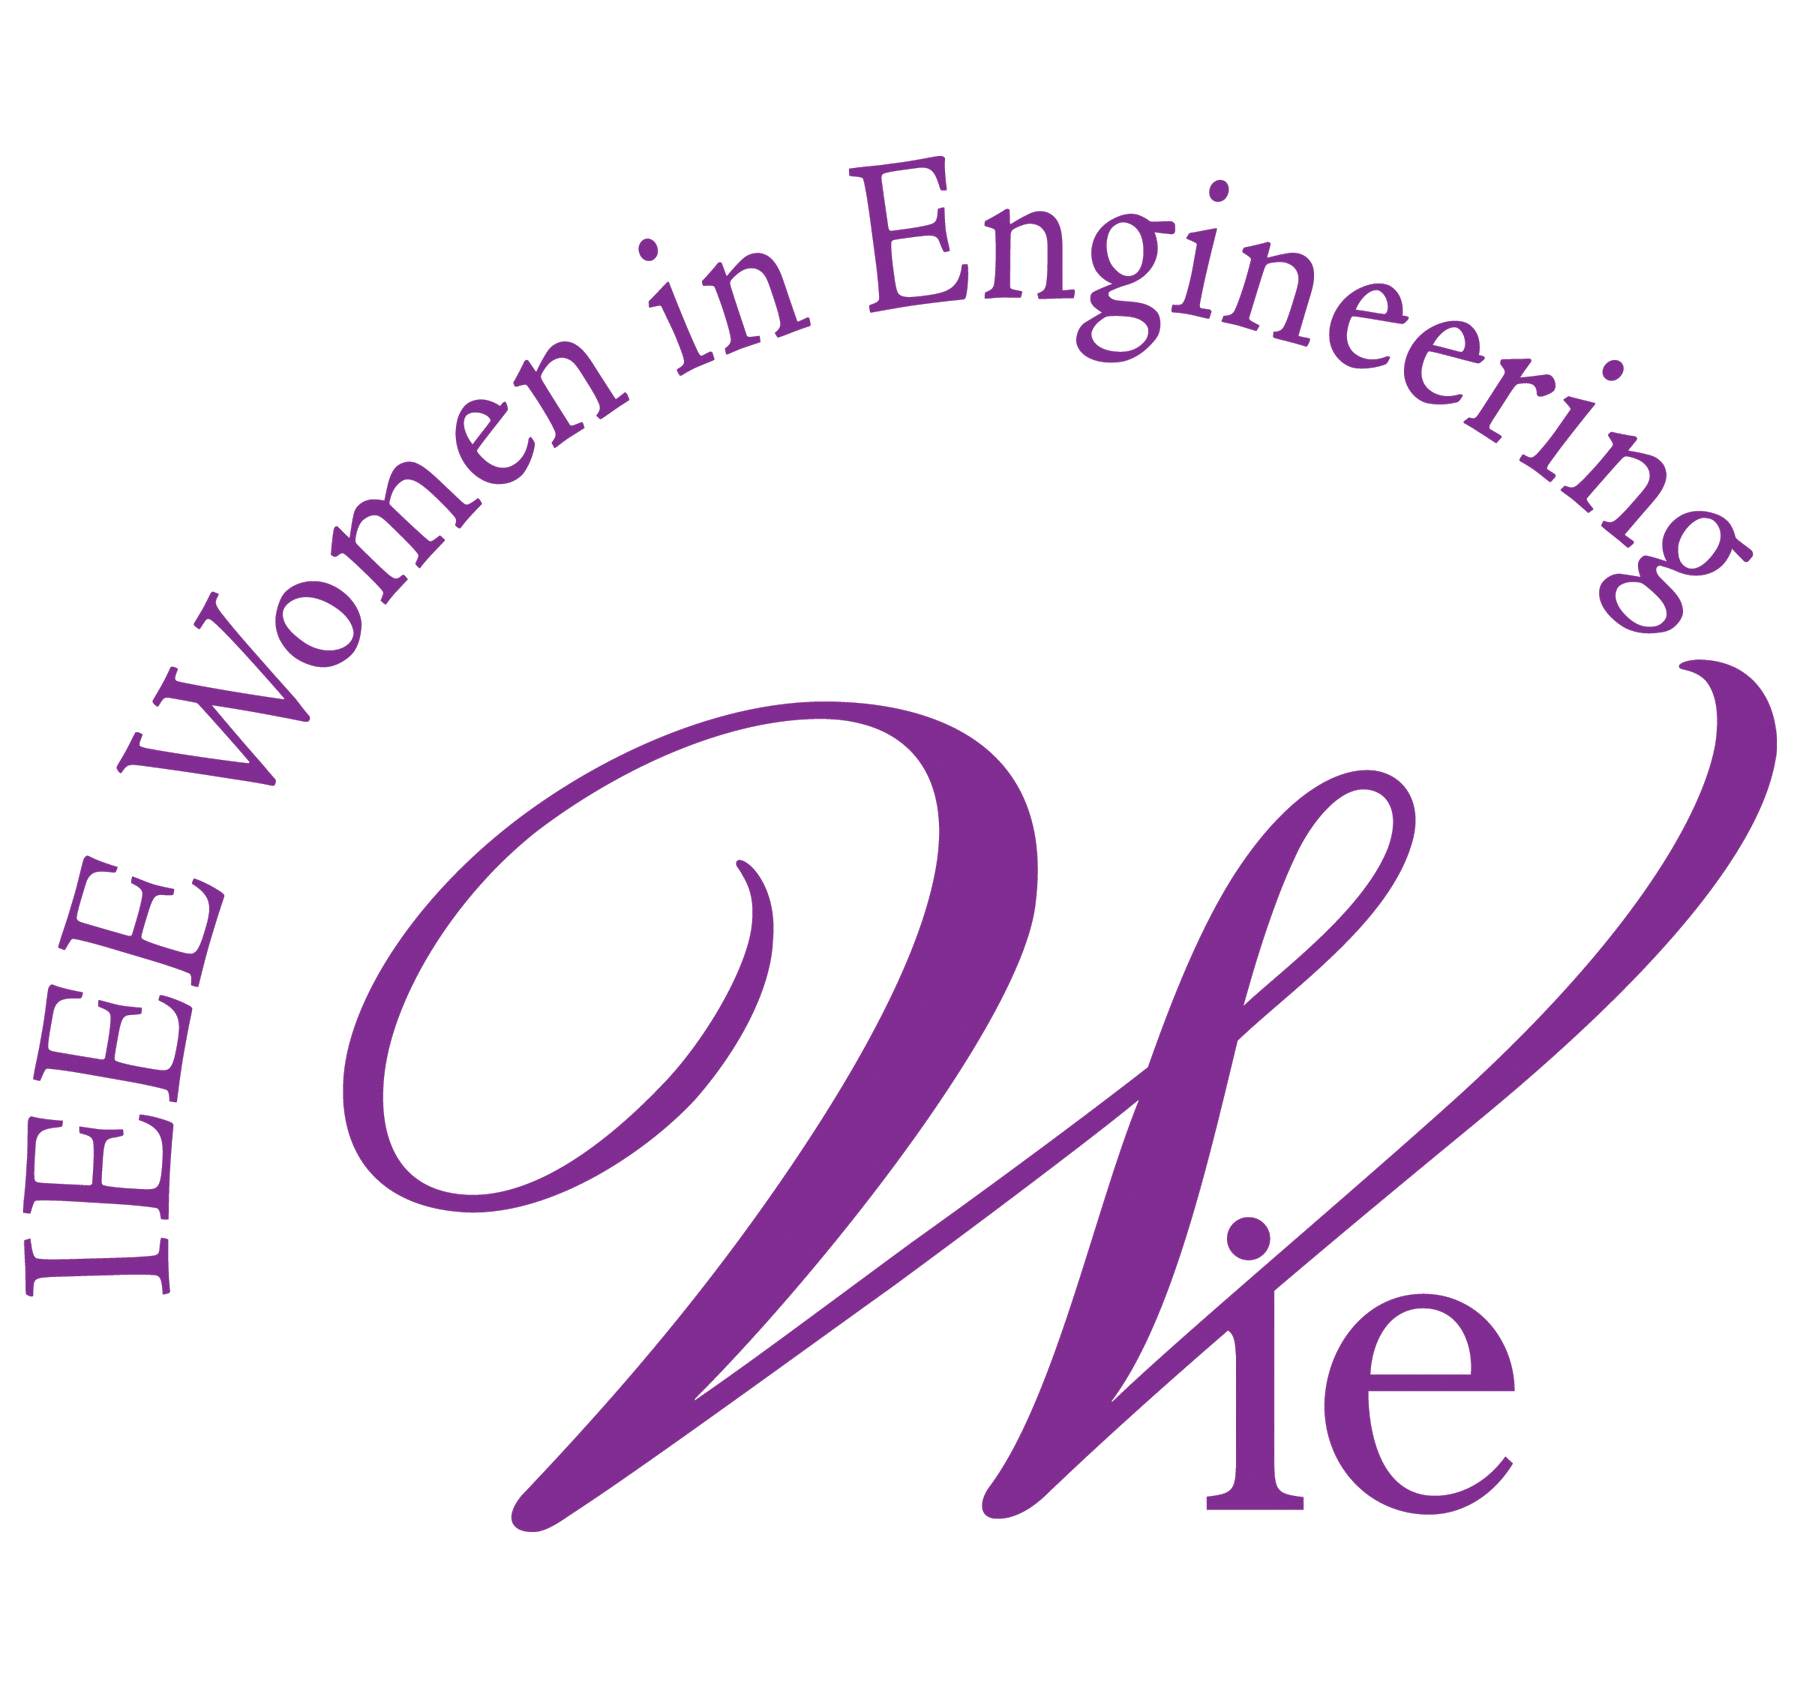 IEEE London Women in Engineering 